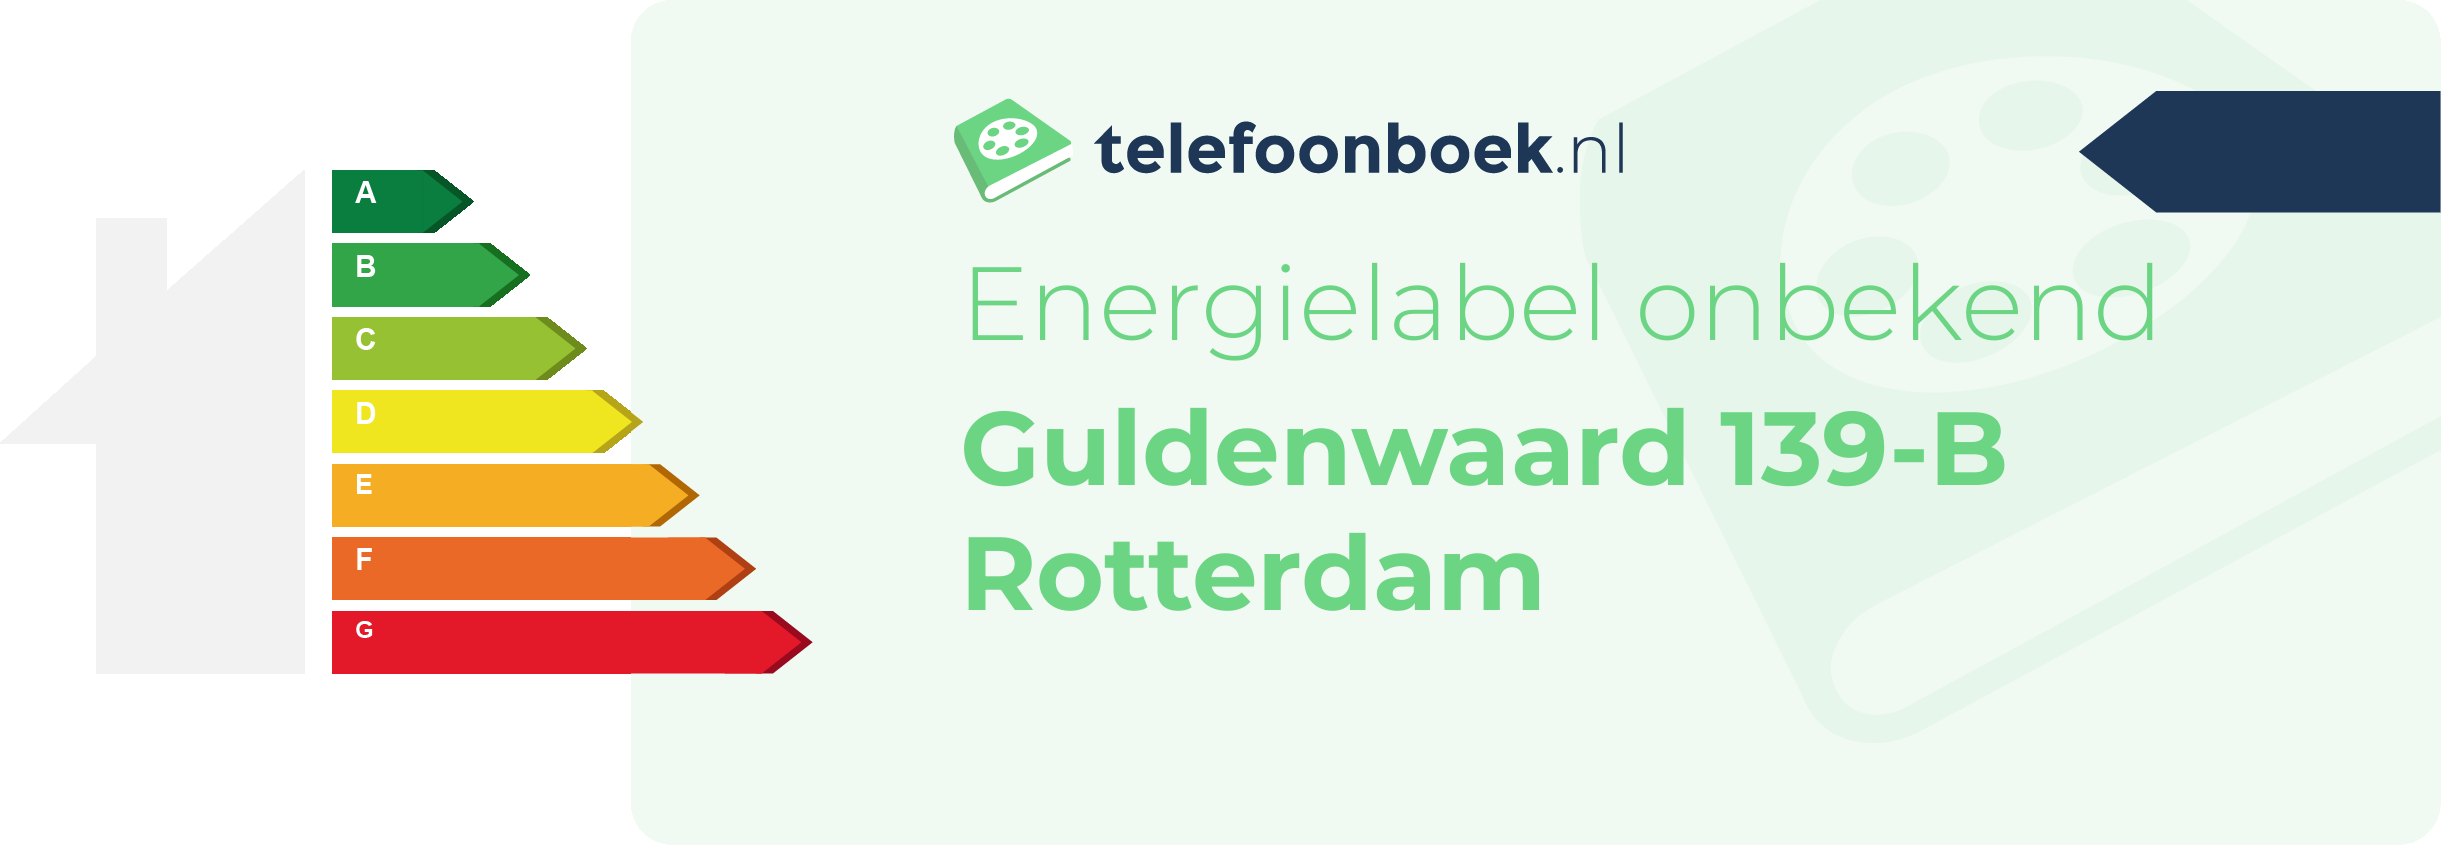 Energielabel Guldenwaard 139-B Rotterdam